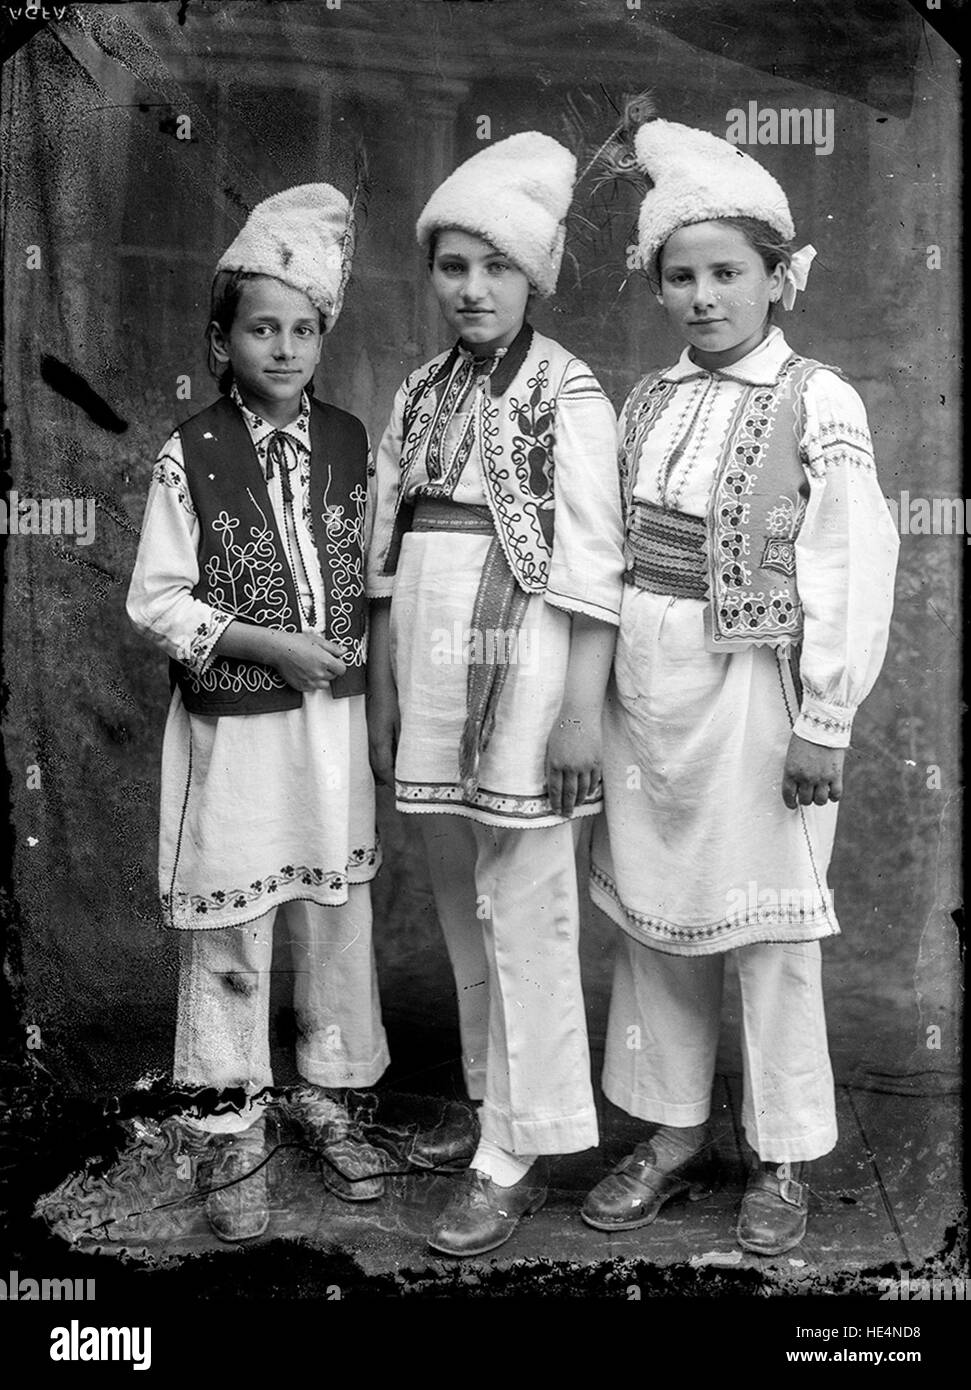 Trei copii în costume populare Stock Photo - Alamy